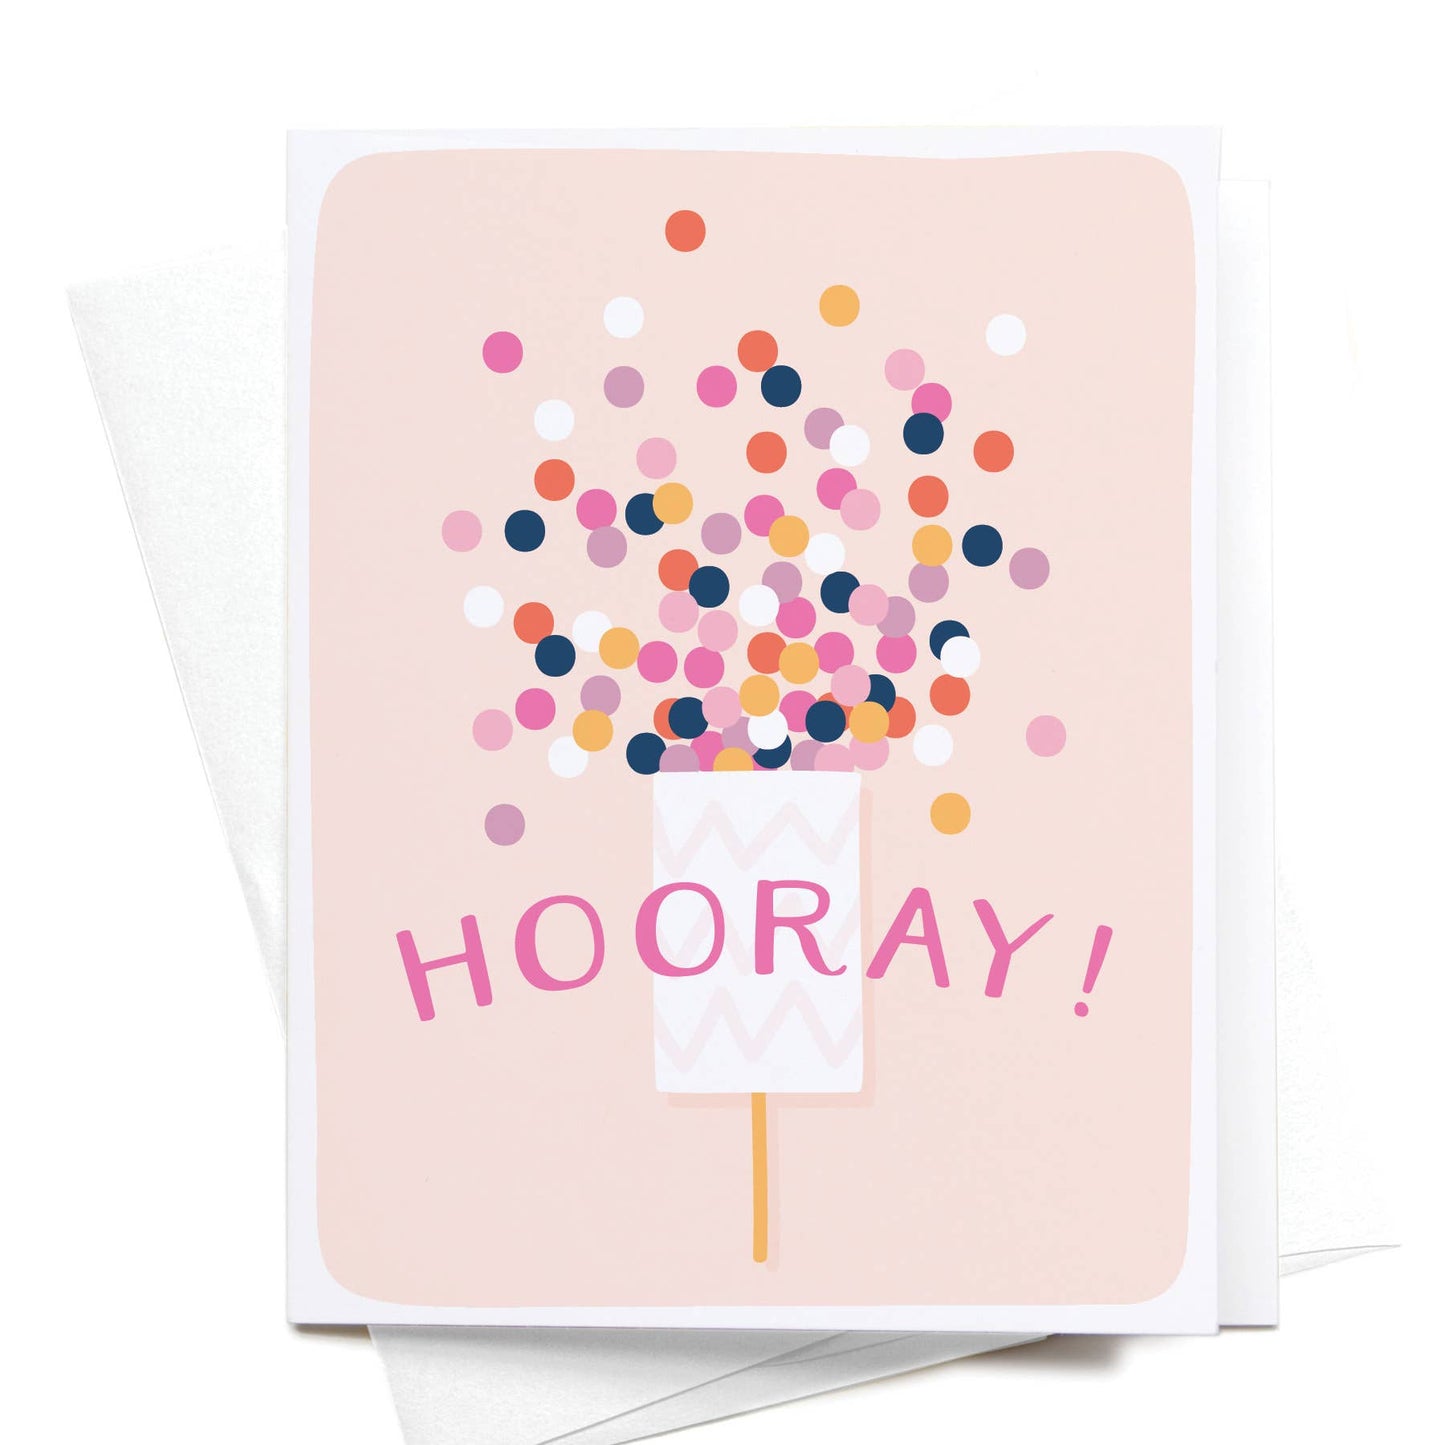 "Hooray!" Confetti Popper Greeting Card